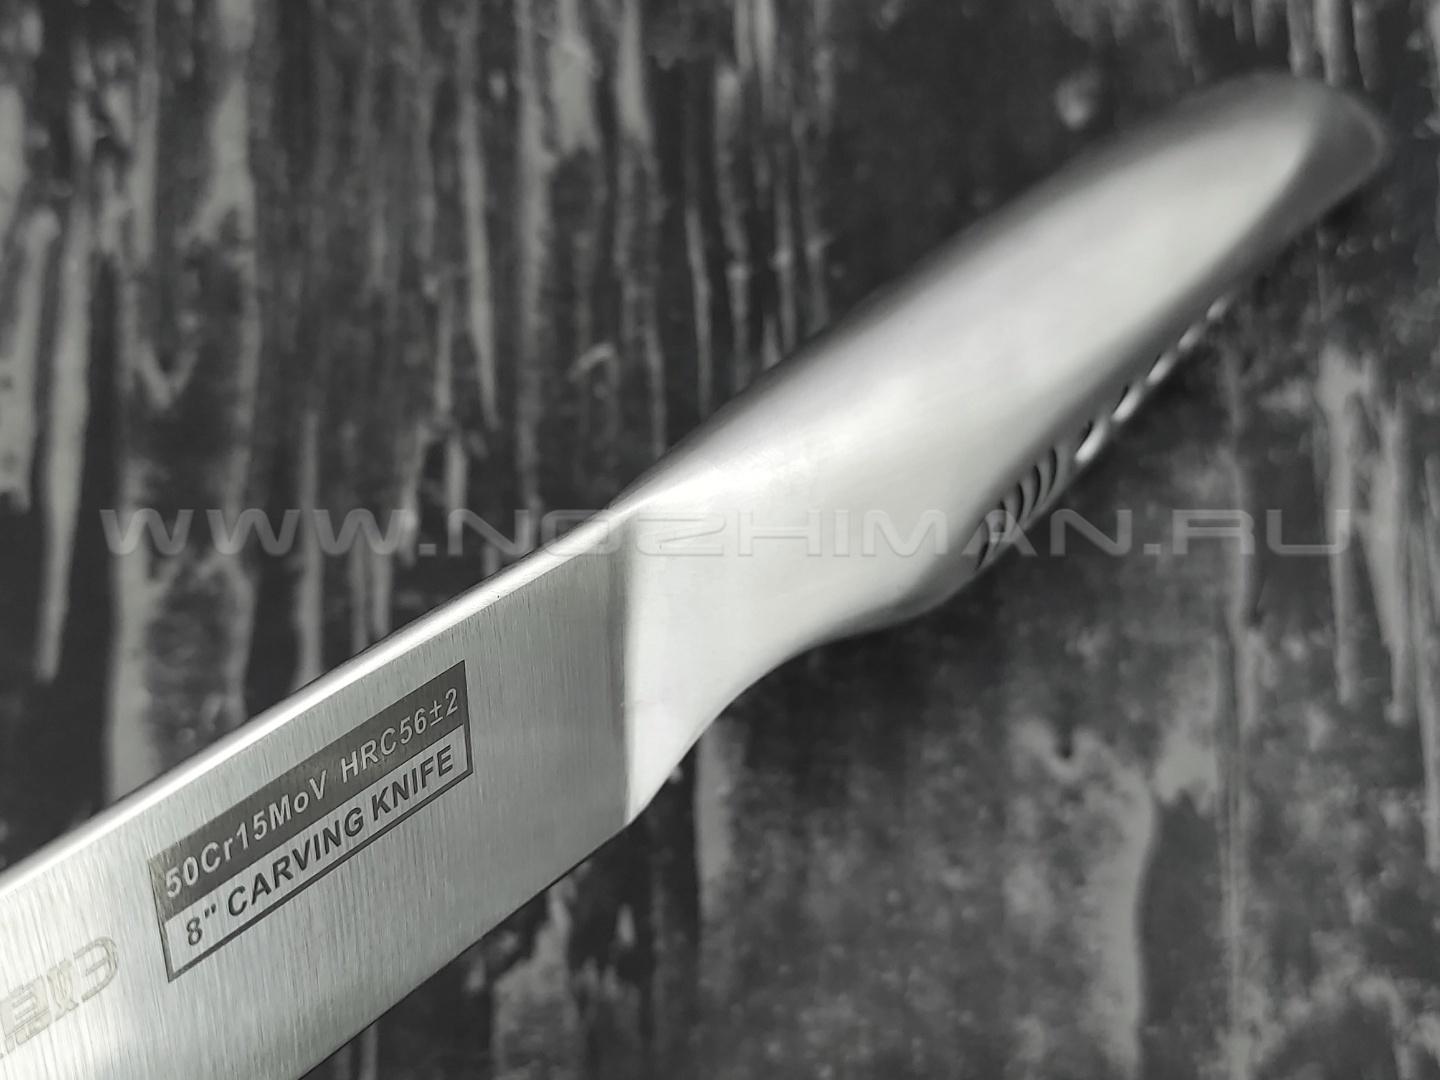 QXF Shark разделочный нож R-5348 сталь 50Cr15MoV, рукоять сталь